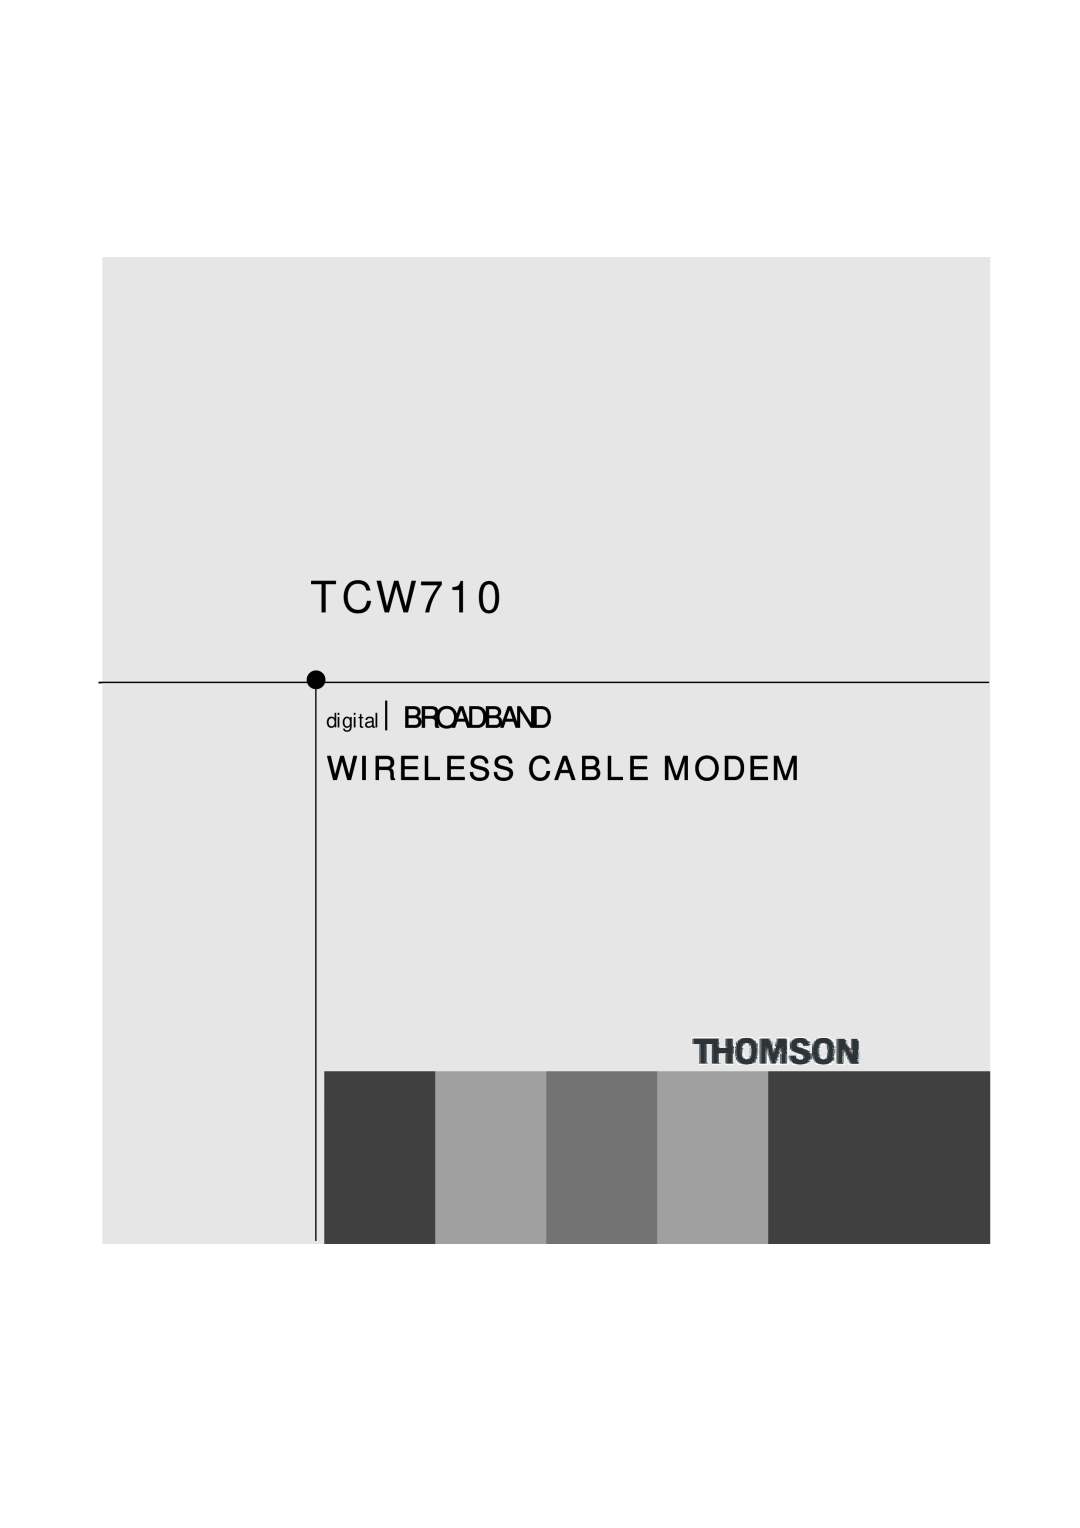 Technicolor - Thomson TCW710 manual Wireless Cable Modem, digital  BROADBAND 